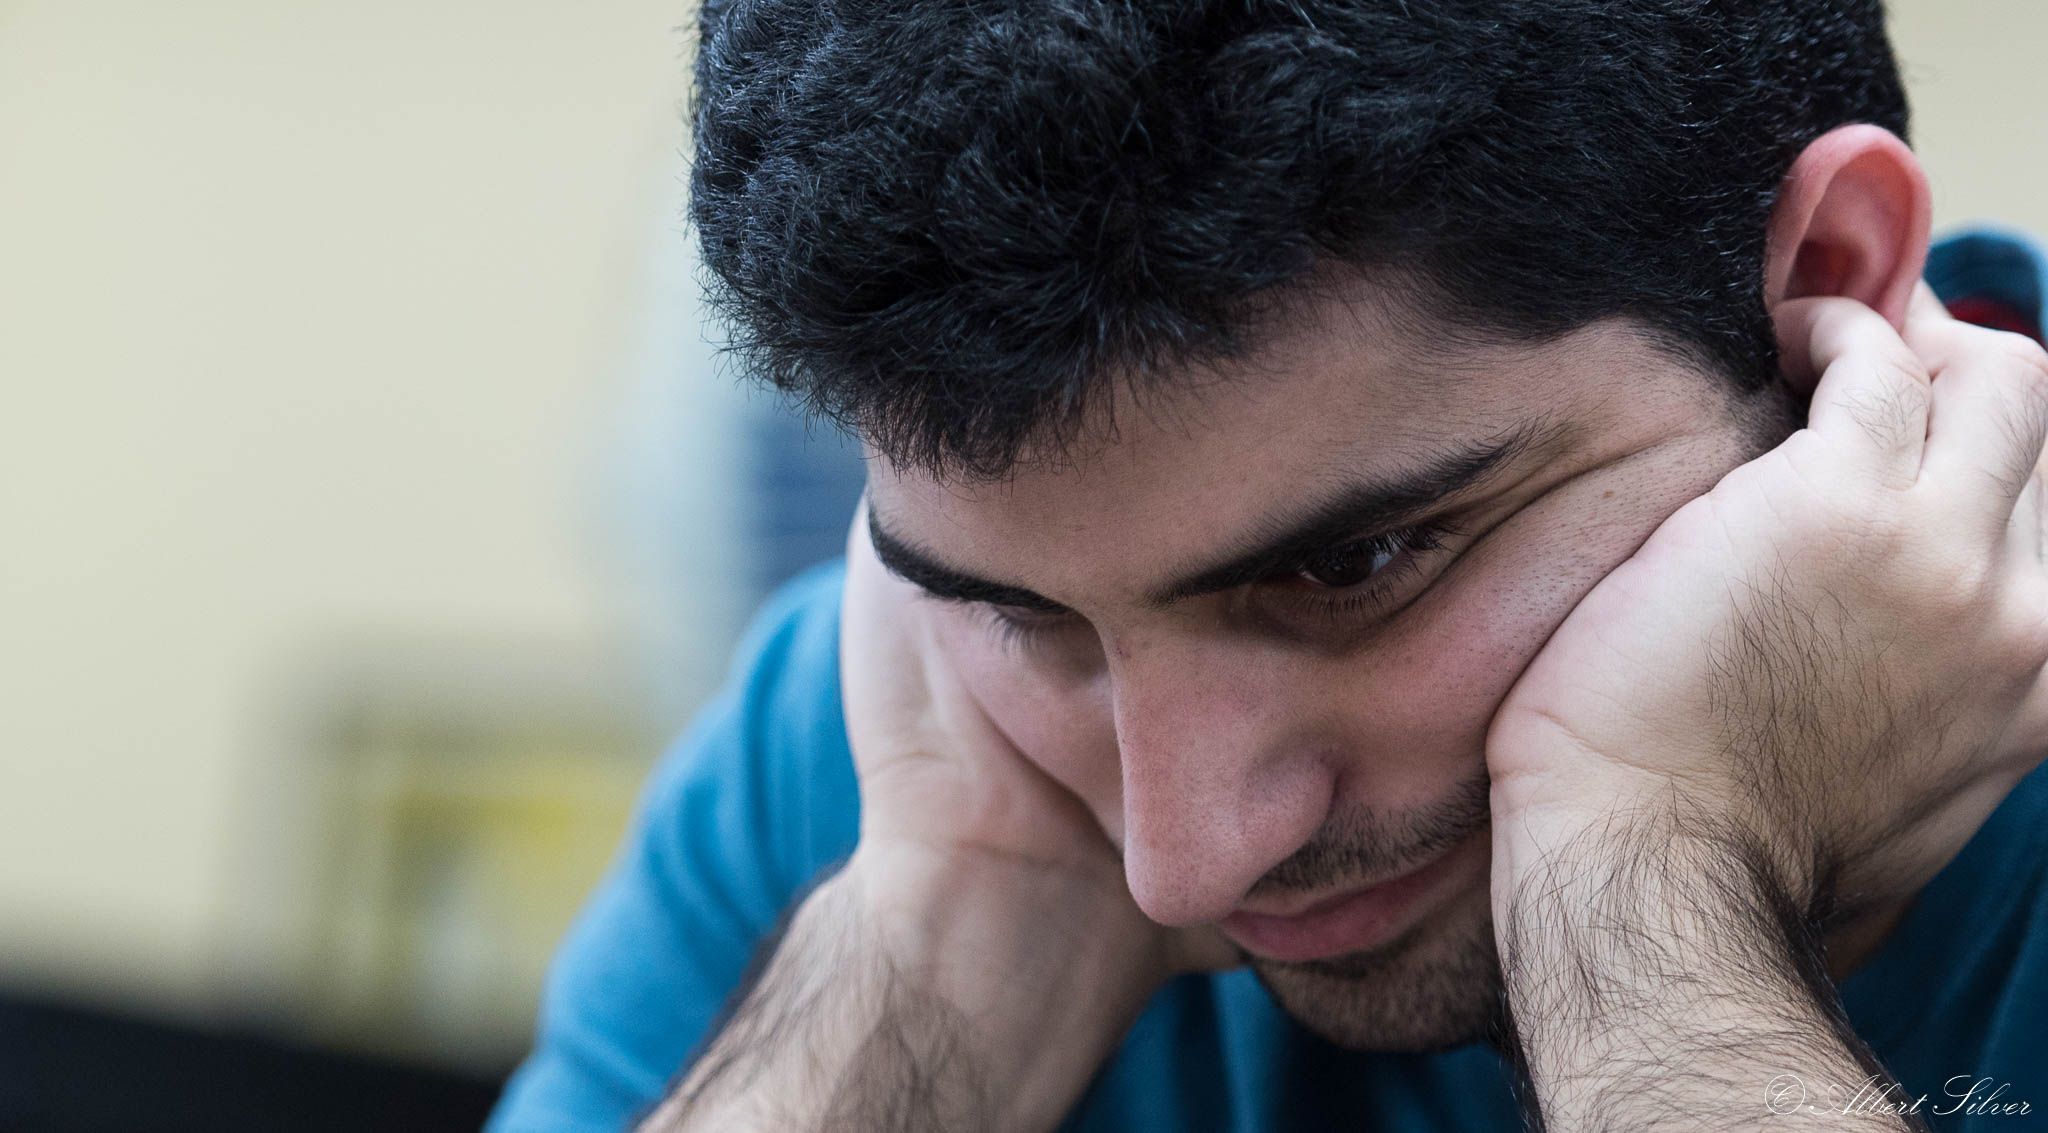 Sharjah Masters on X: #chesscouples Brazilian GM Alexandr Fier